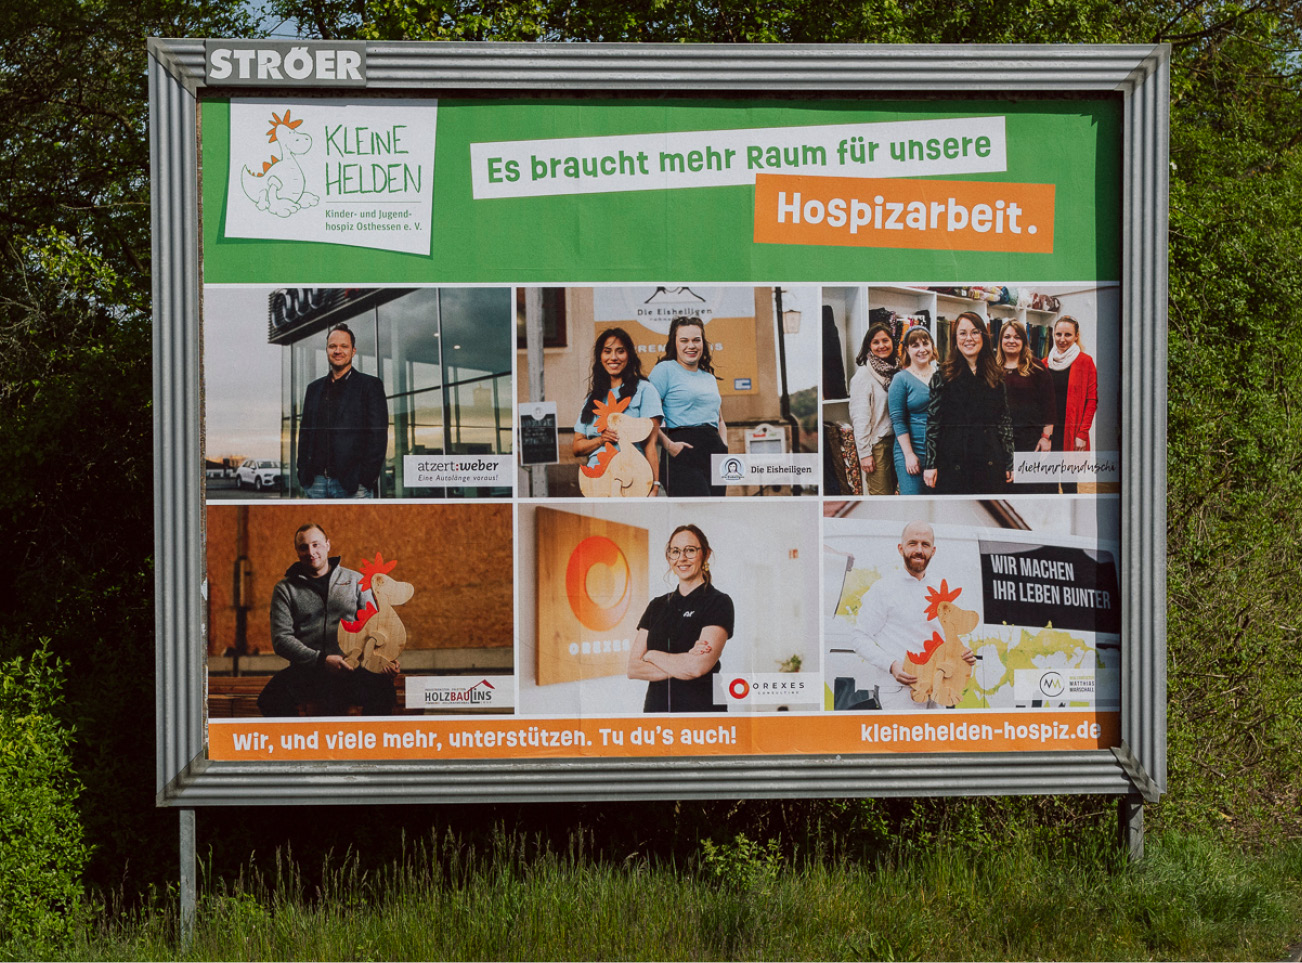 Stroer Plakatkampagne "Kleine Helden"